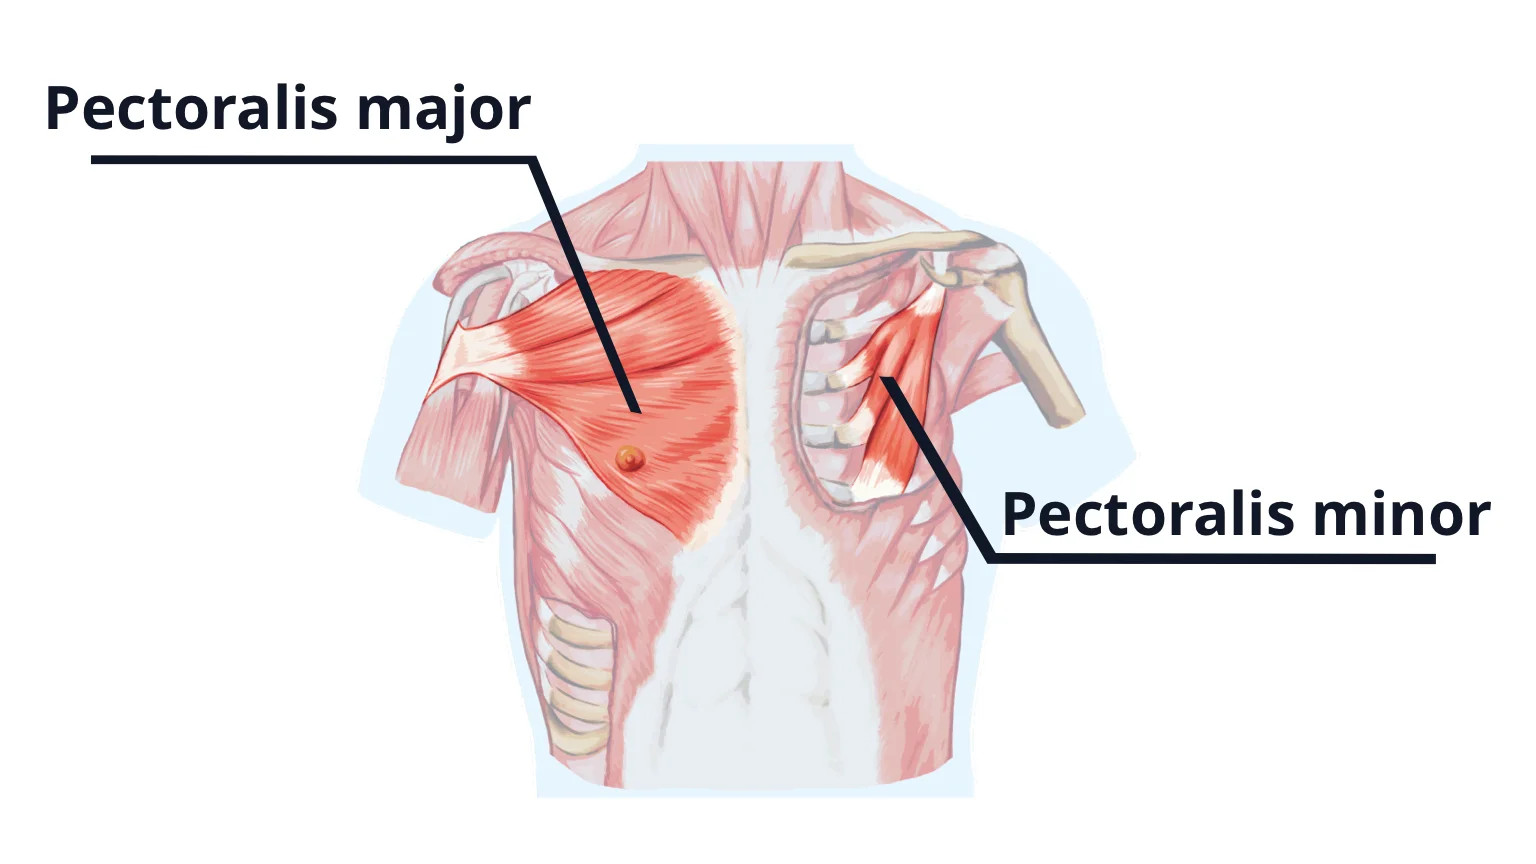 diagram - Pectoralis major and pectoralis minor, the chest muscles